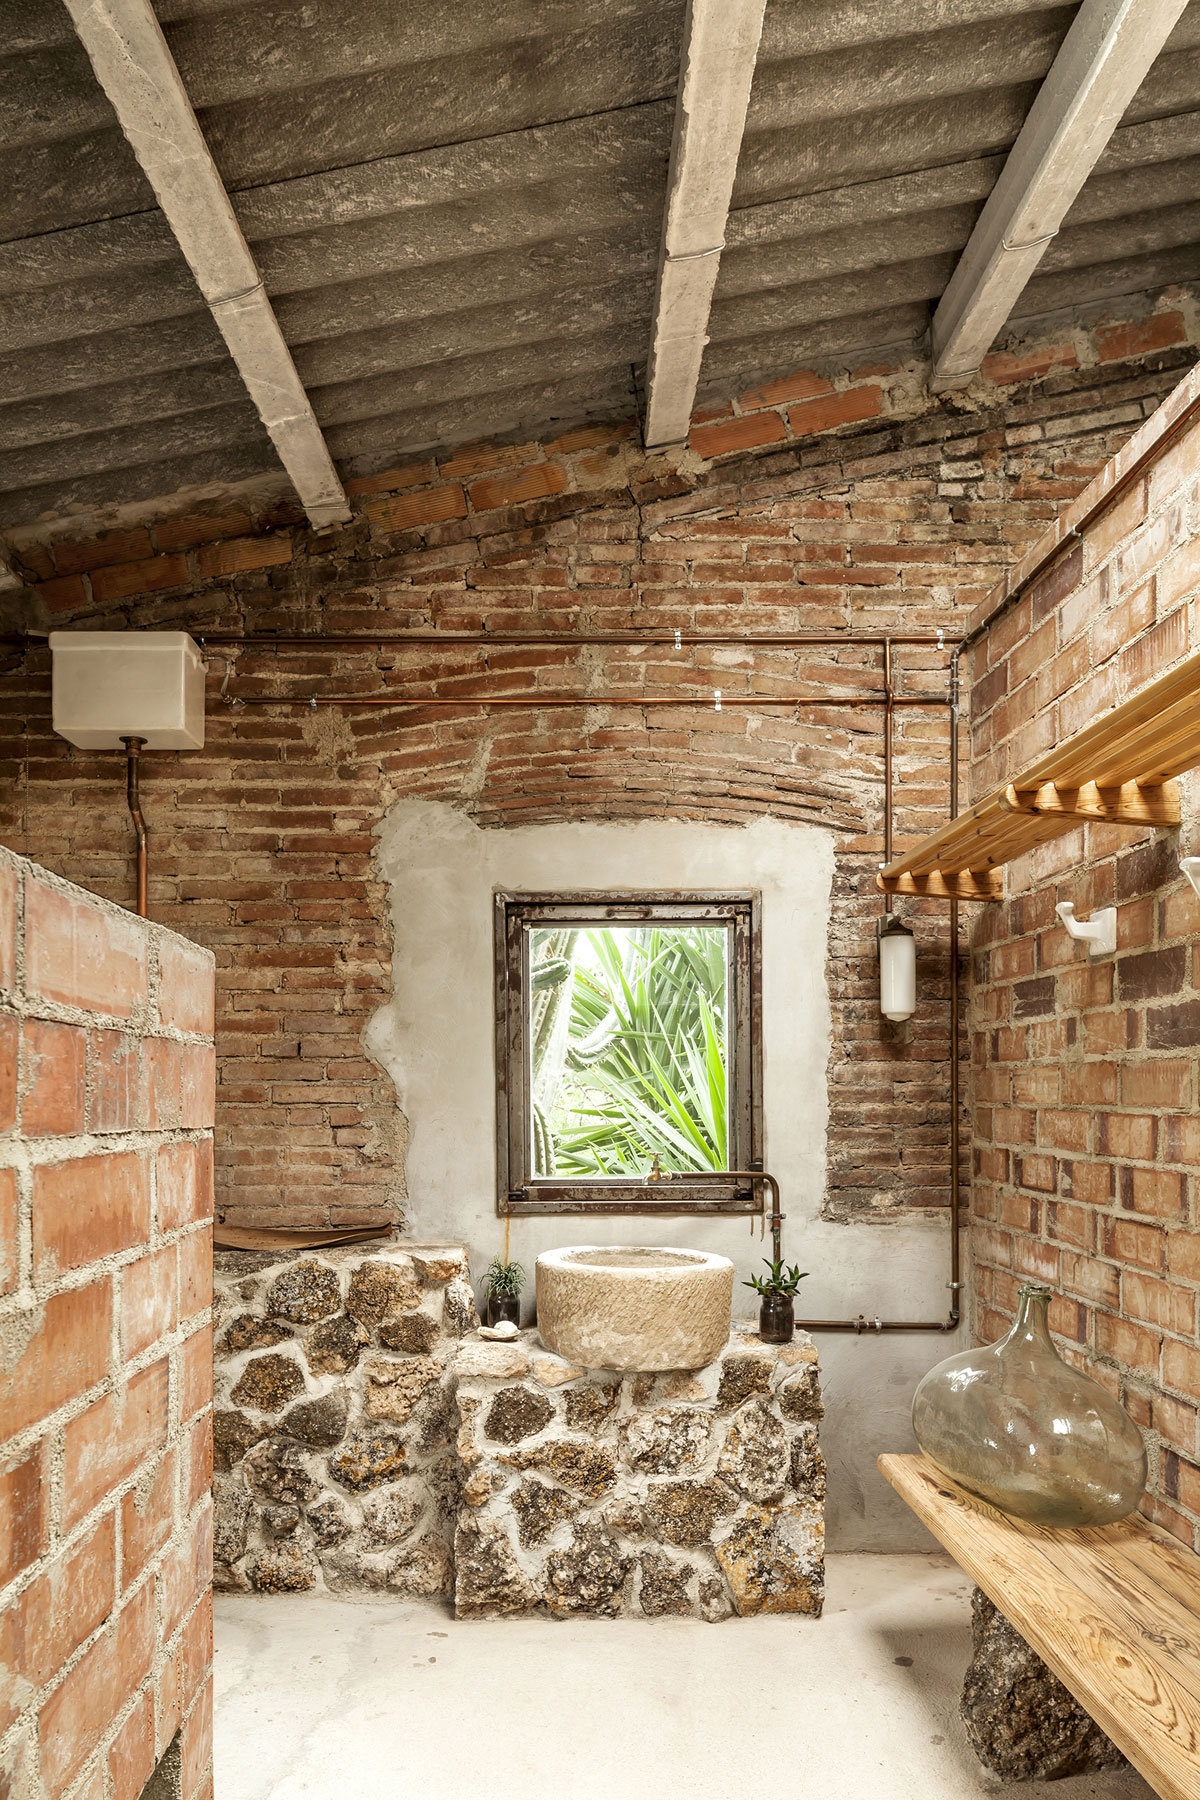 Dressing Room & Bath Room for a Garden / Clara Nubiola (3)